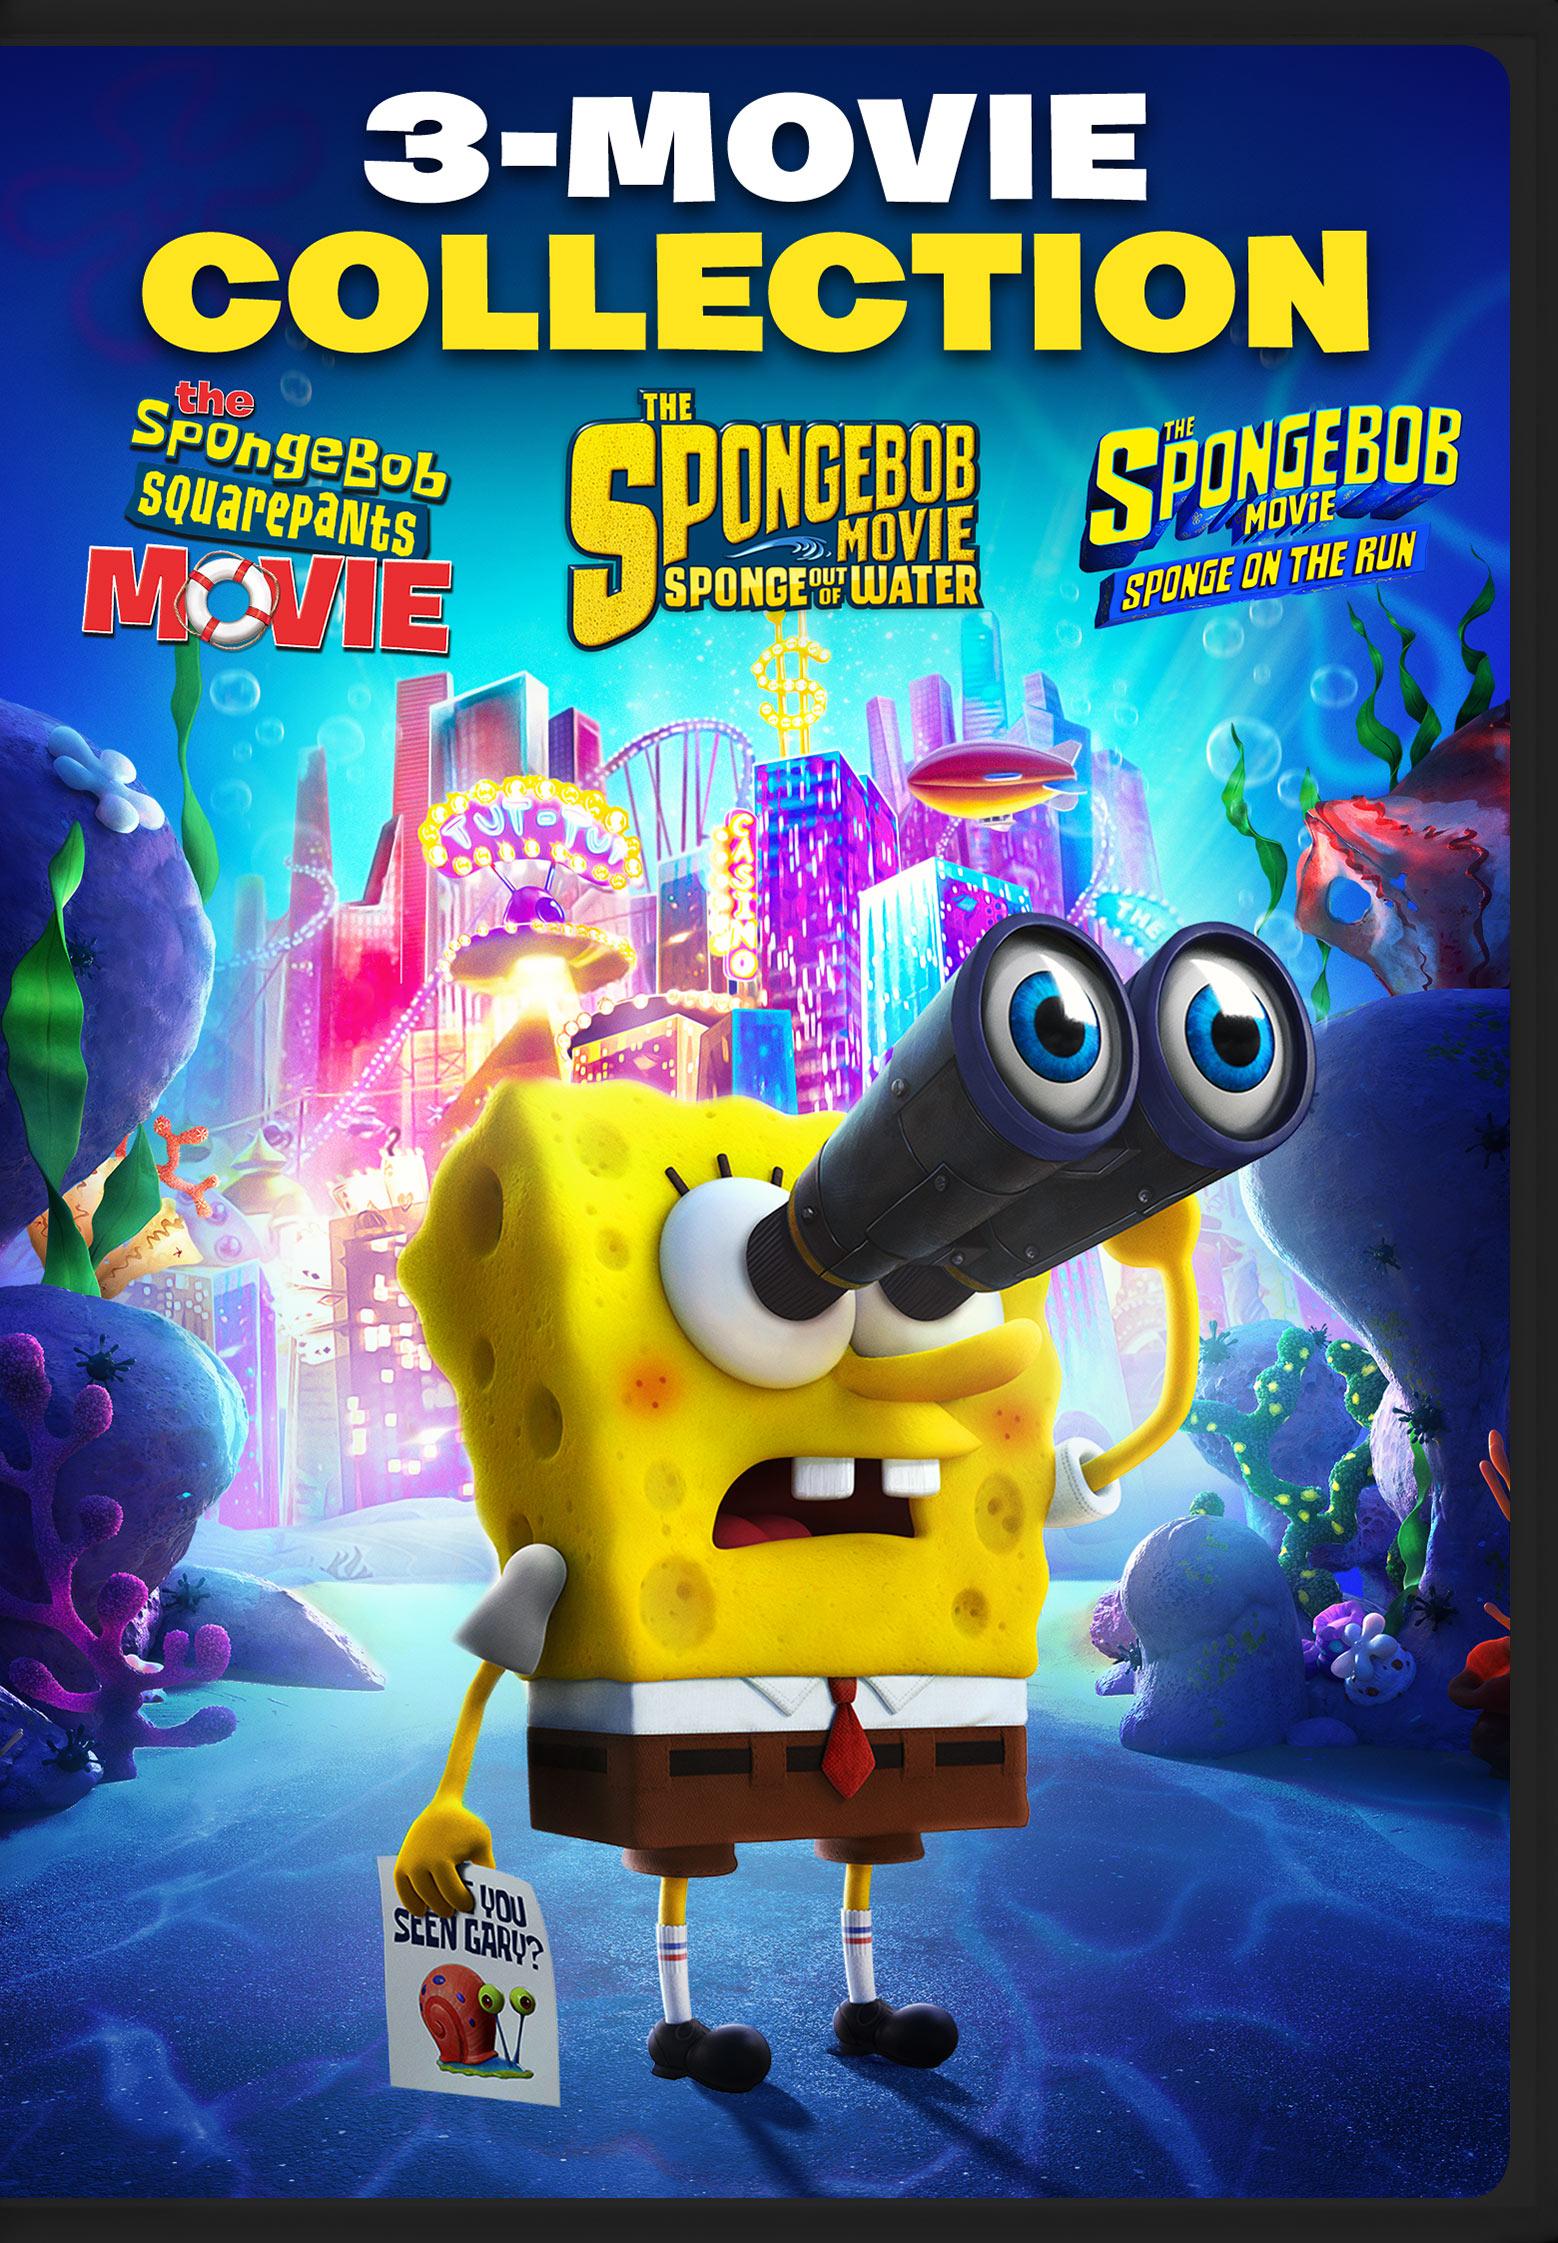 spongebob dvd collection